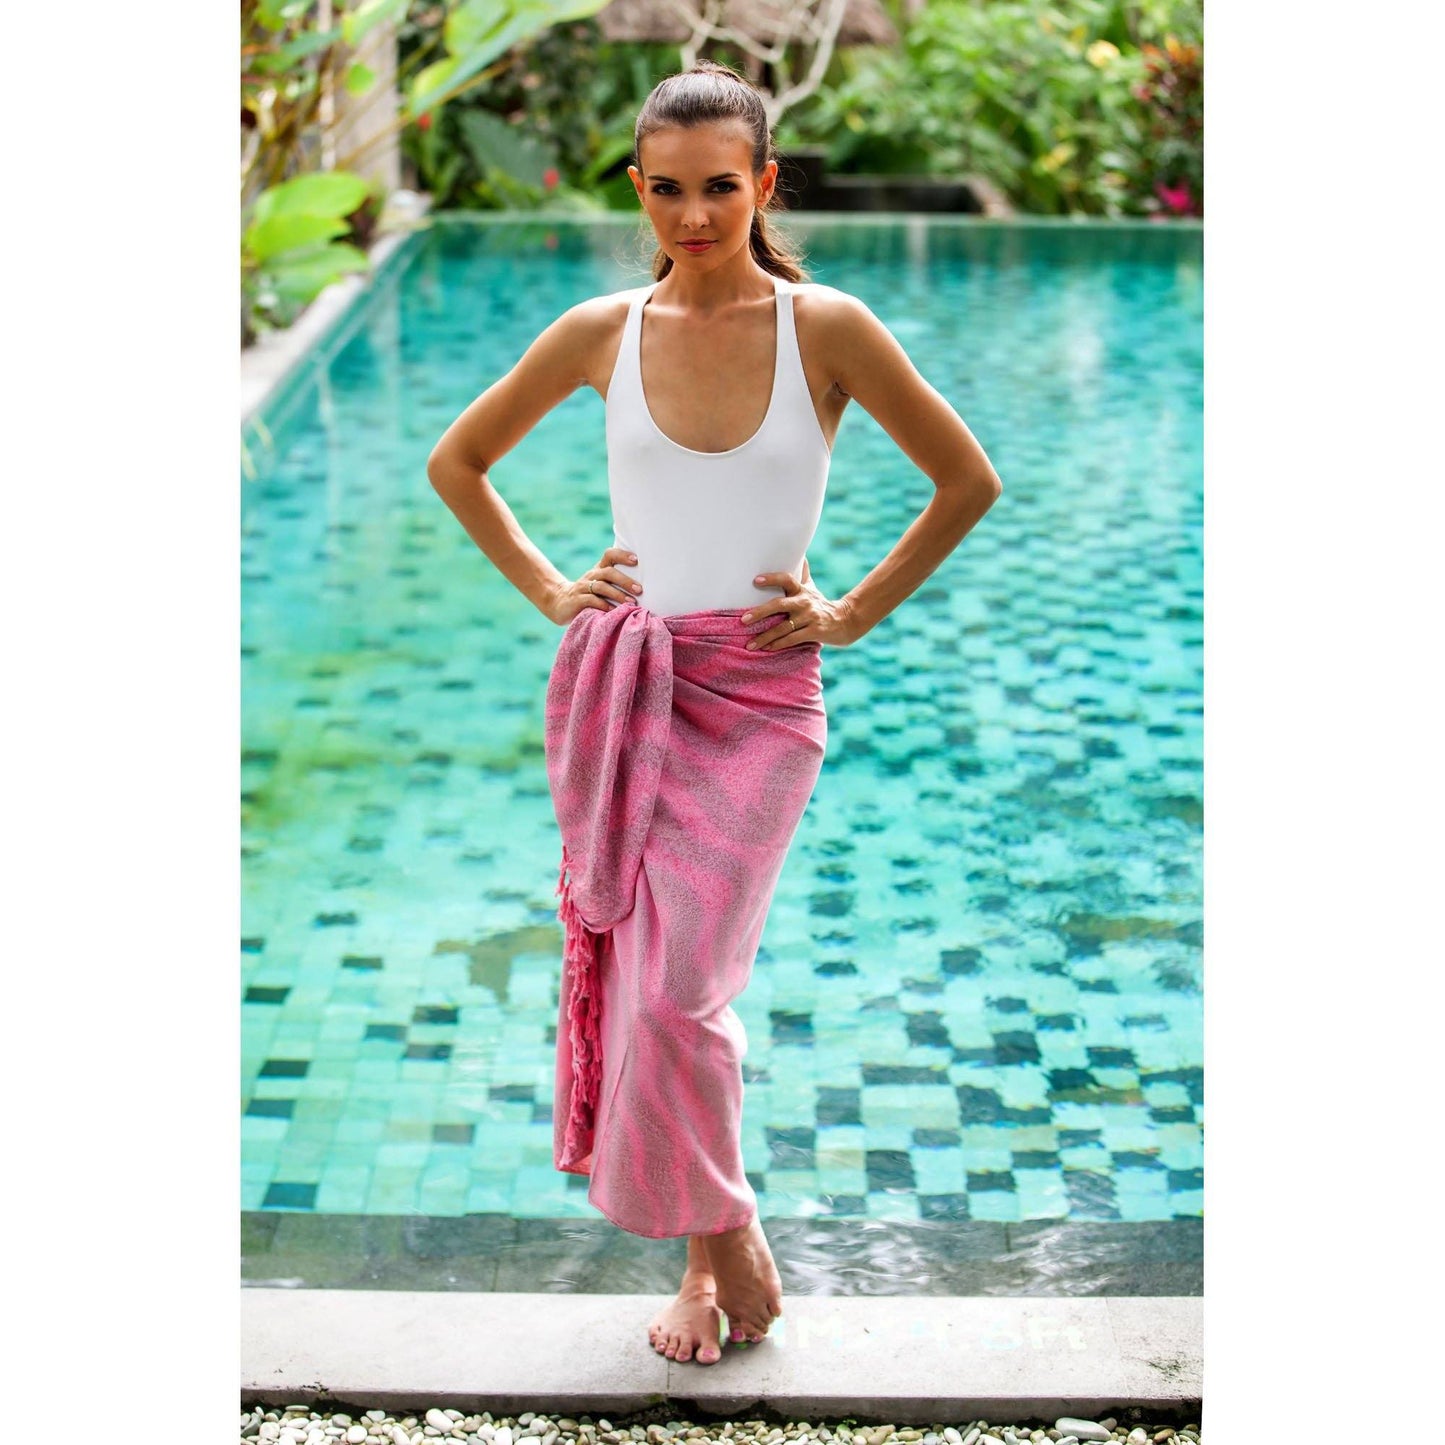 Pink Batik Swimsuit Cover Up